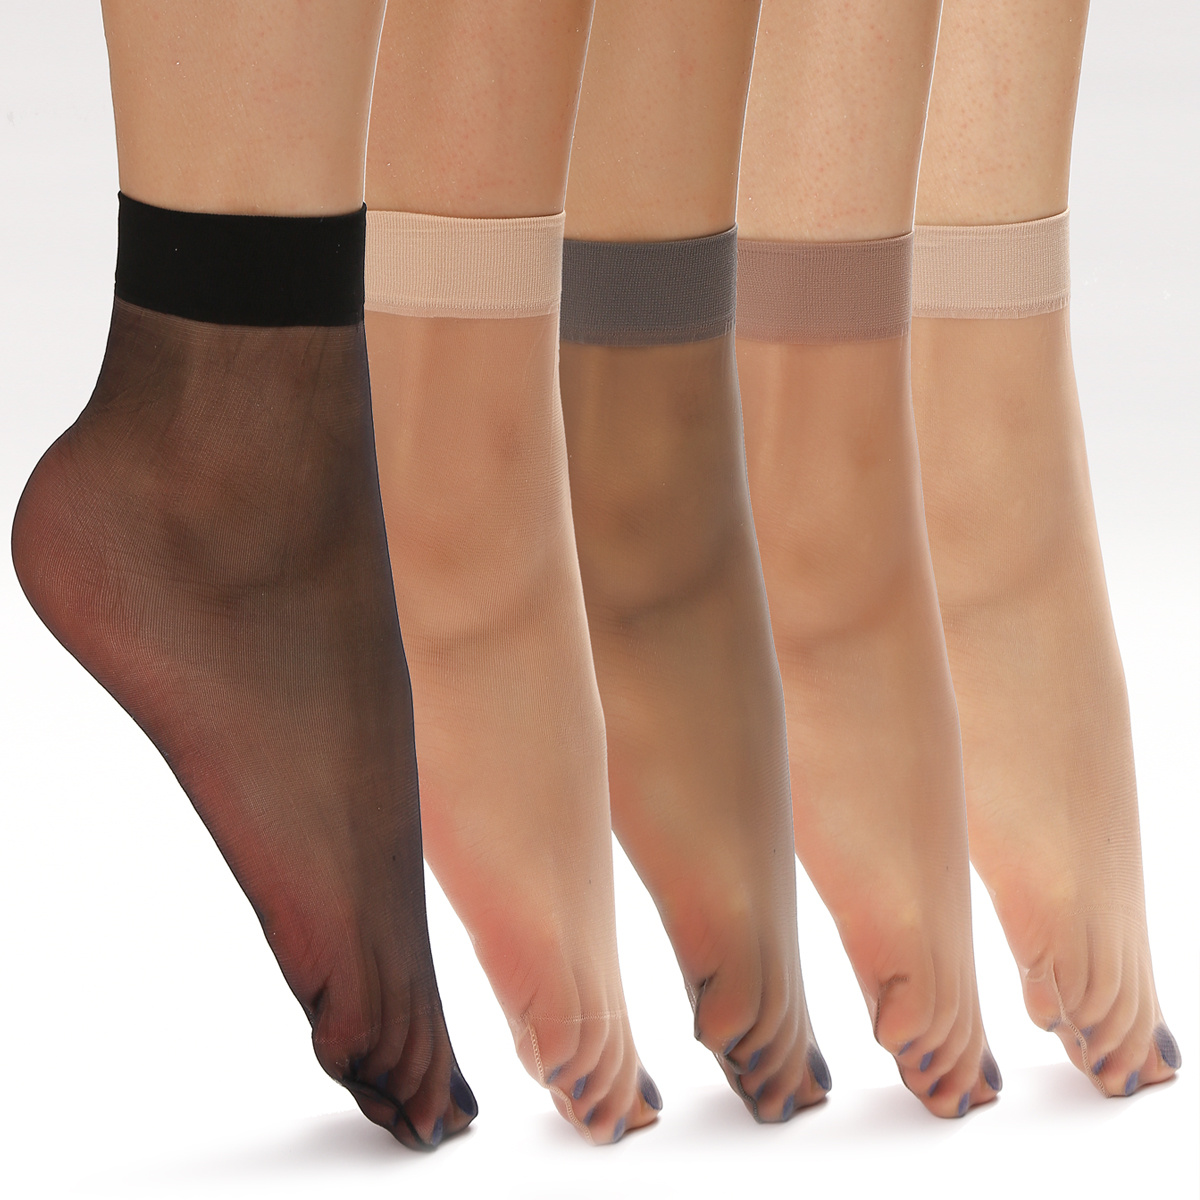 5 Pairs Lady Thin Transparent Silk Nylon Knee High Socks Girls Nylon Knee  High Socks